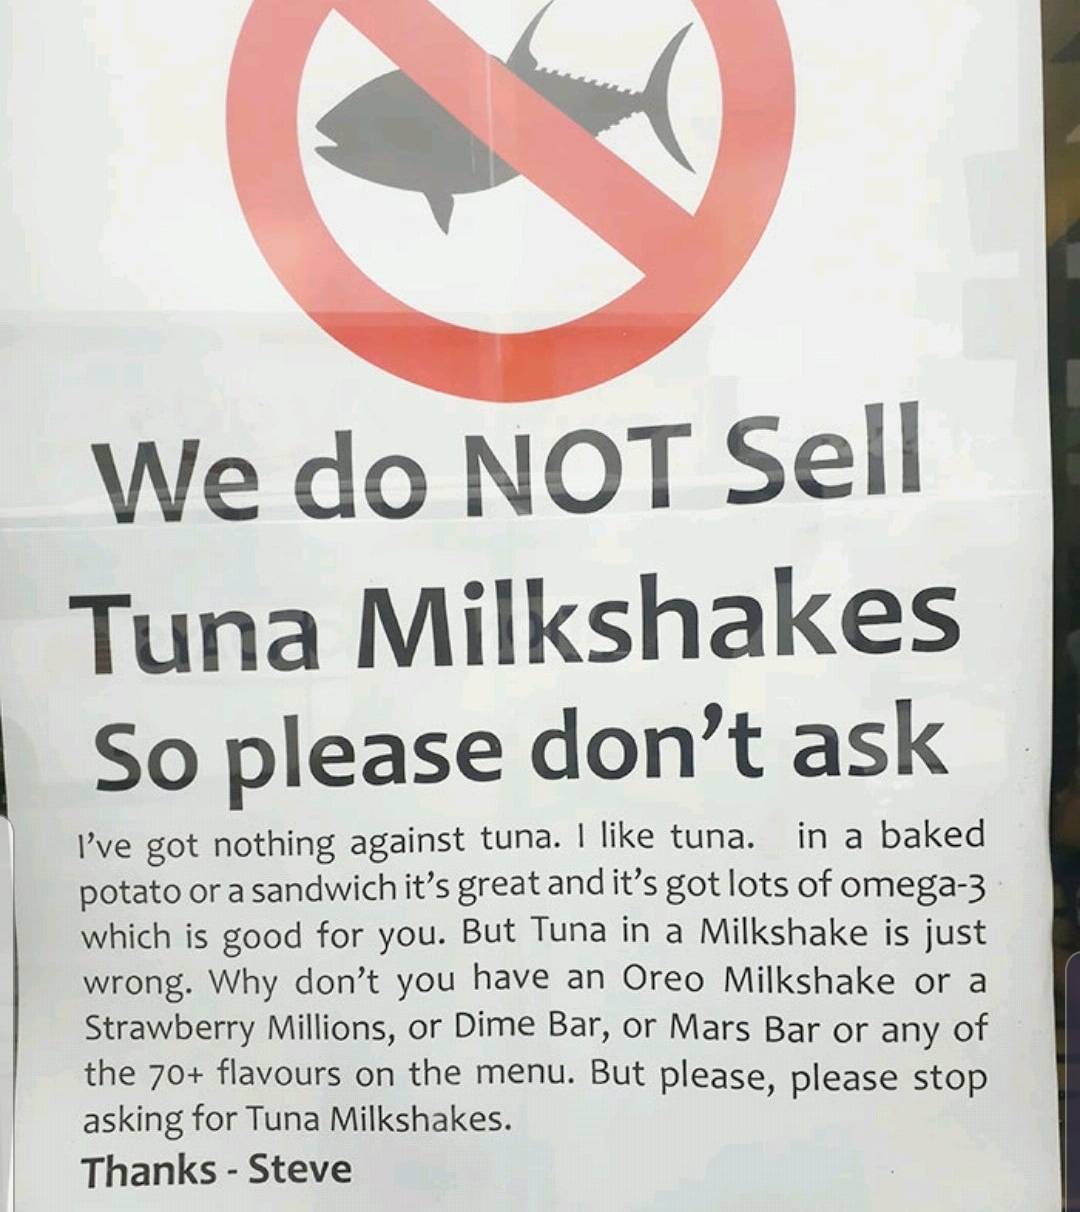 #ban tuna milkshakes.